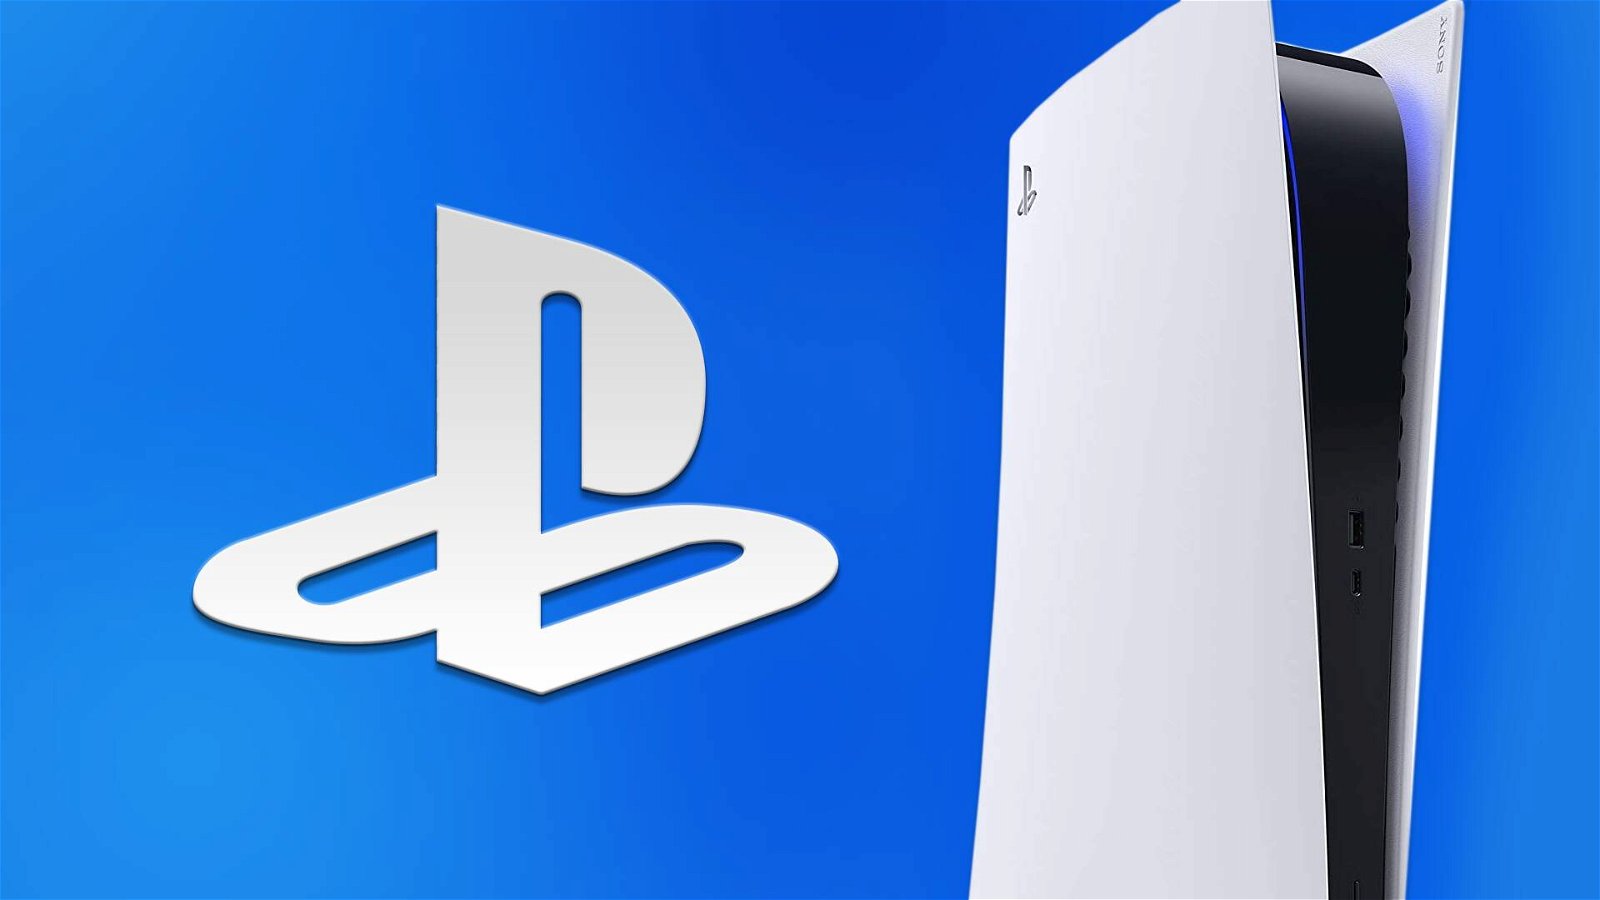 L'ultima esclusiva PlayStation rimuove una feature next-gen su PS5